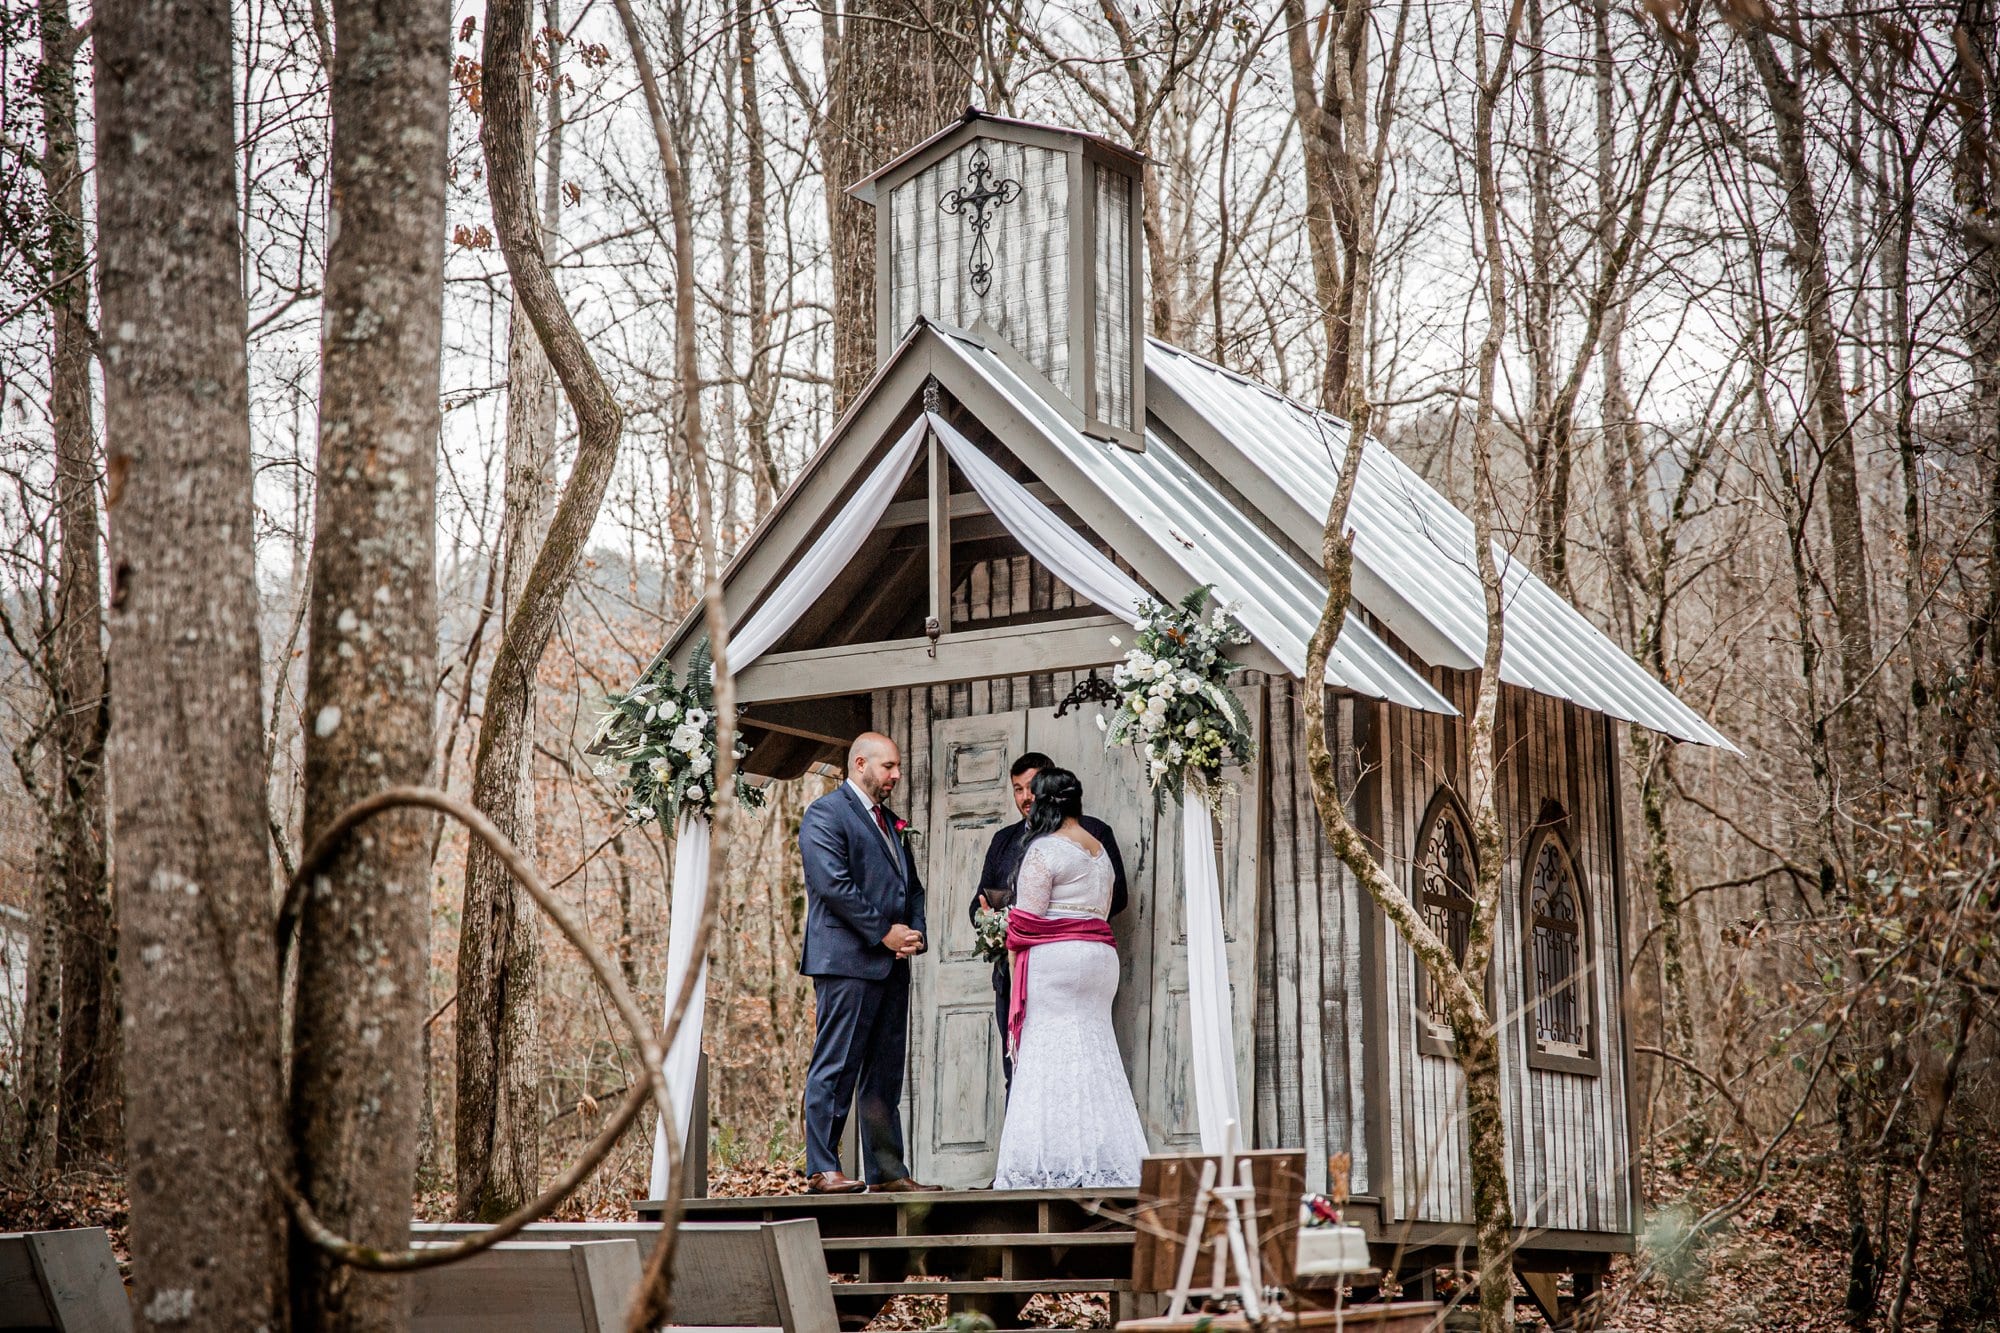 Wedding chapels for an intimate wedding or Gatlinburg elopement. 